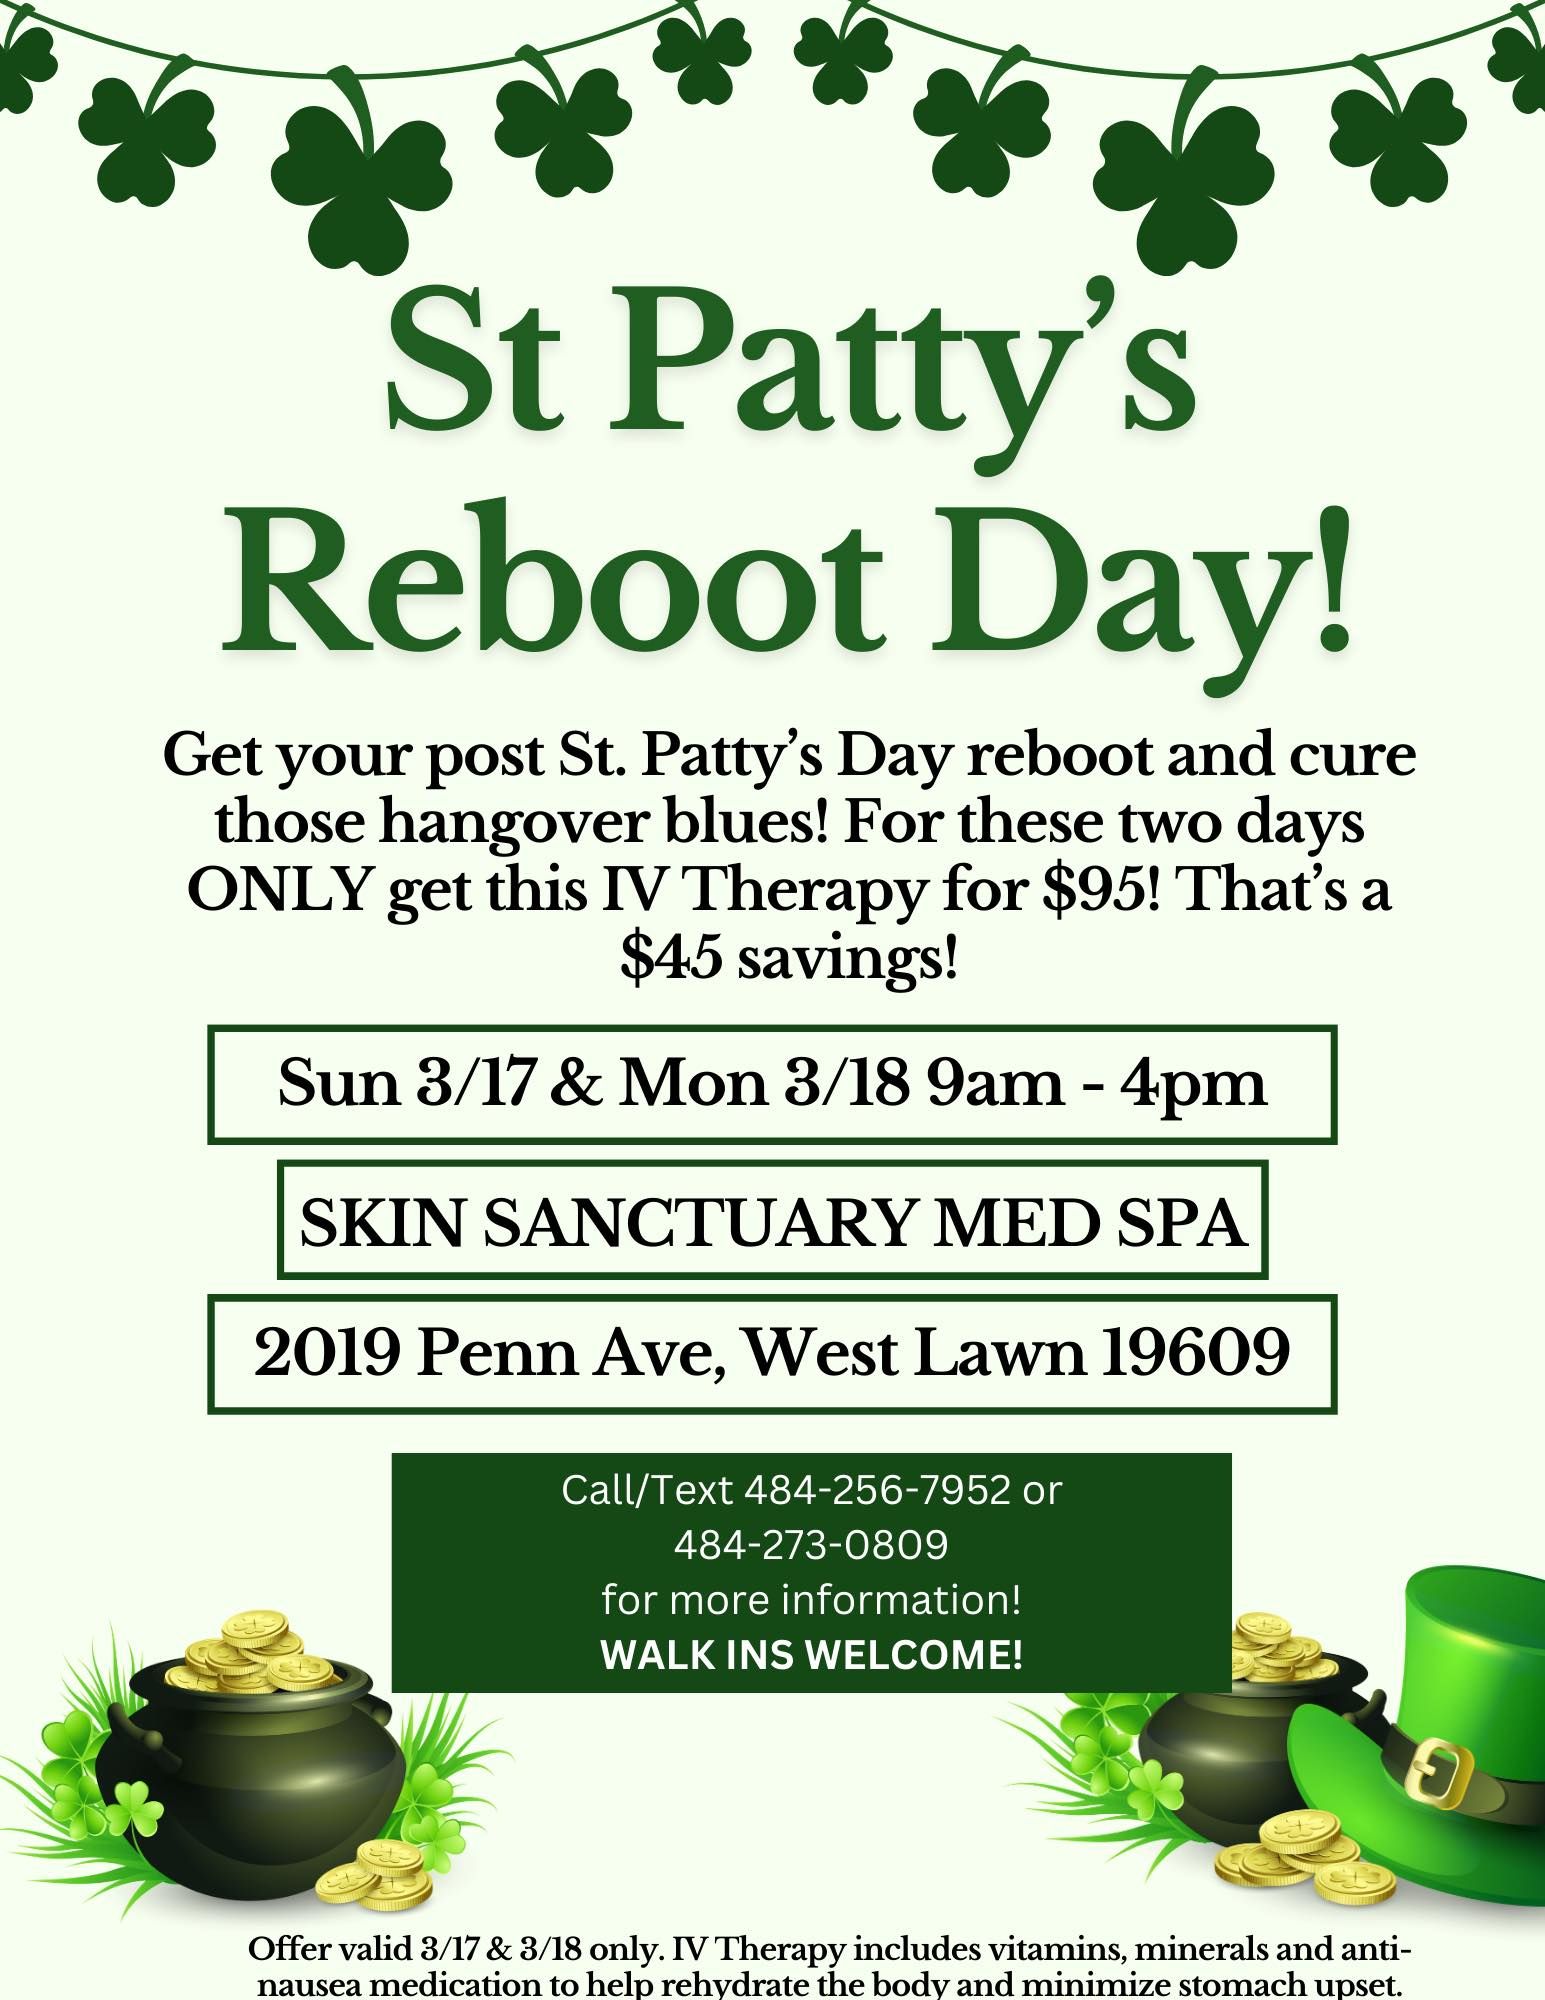 St Patty's Reboot Day